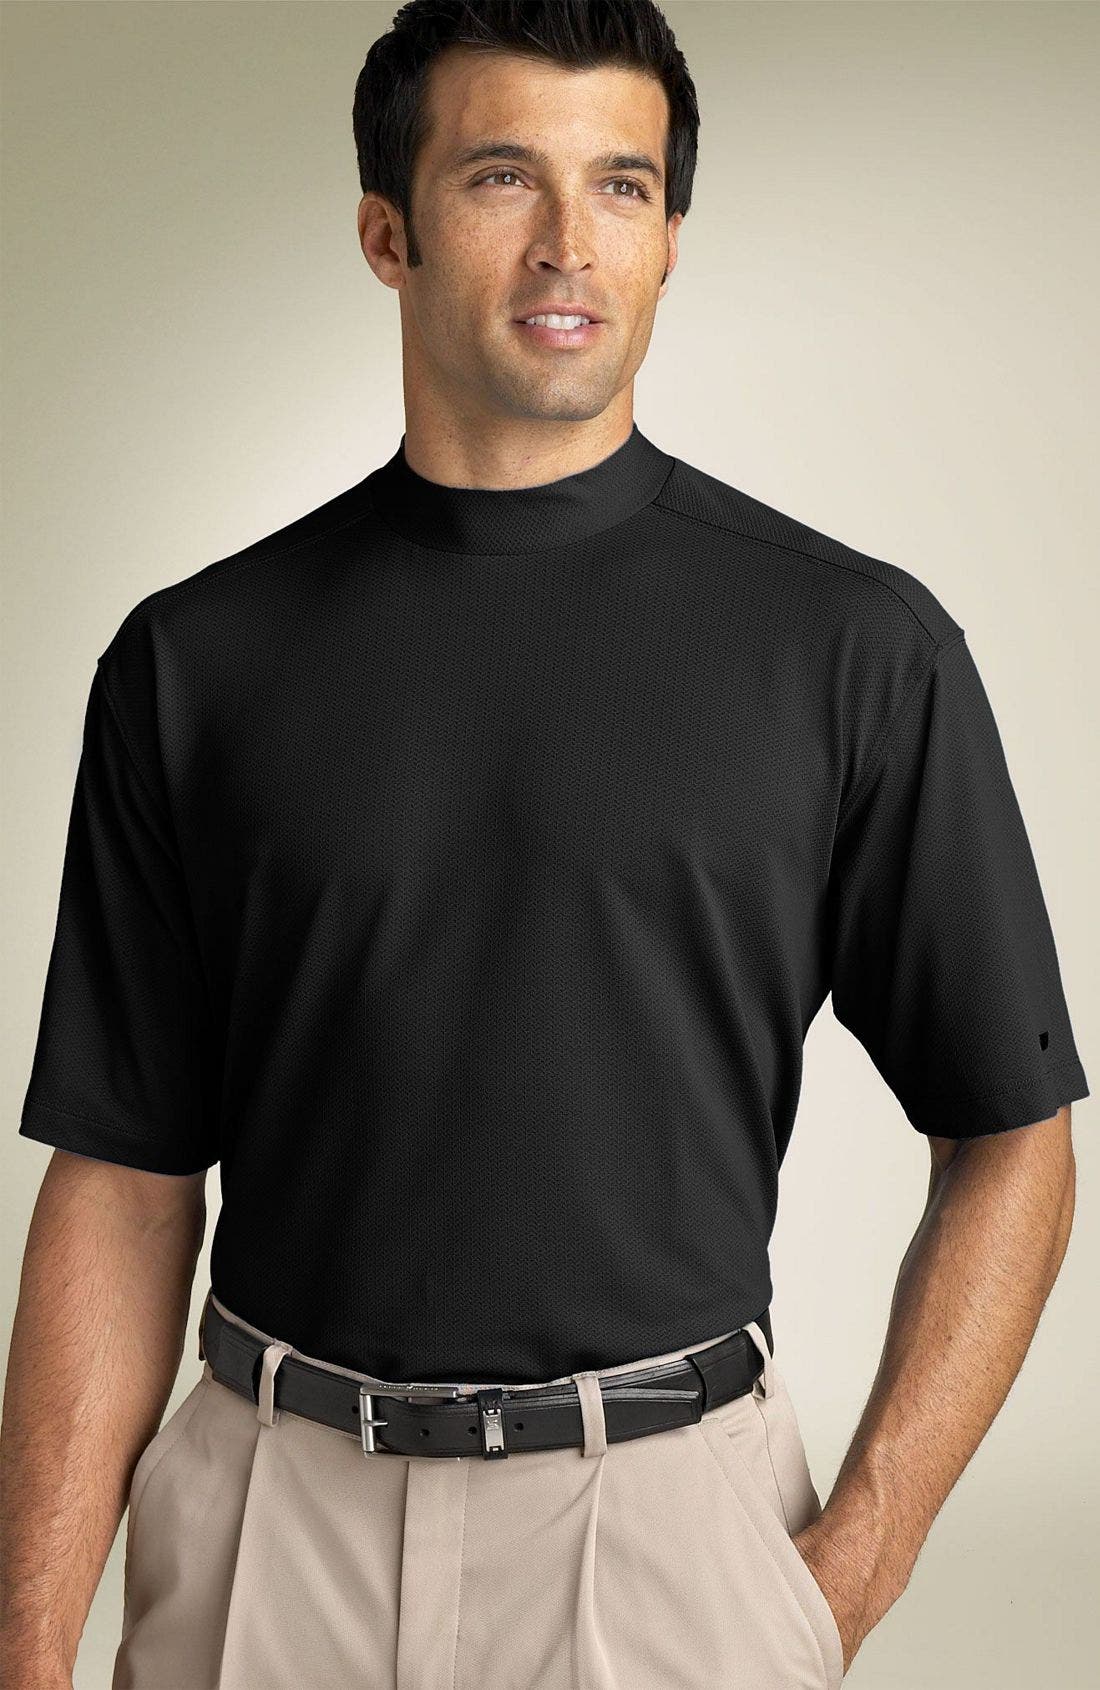 golf mock neck shirts